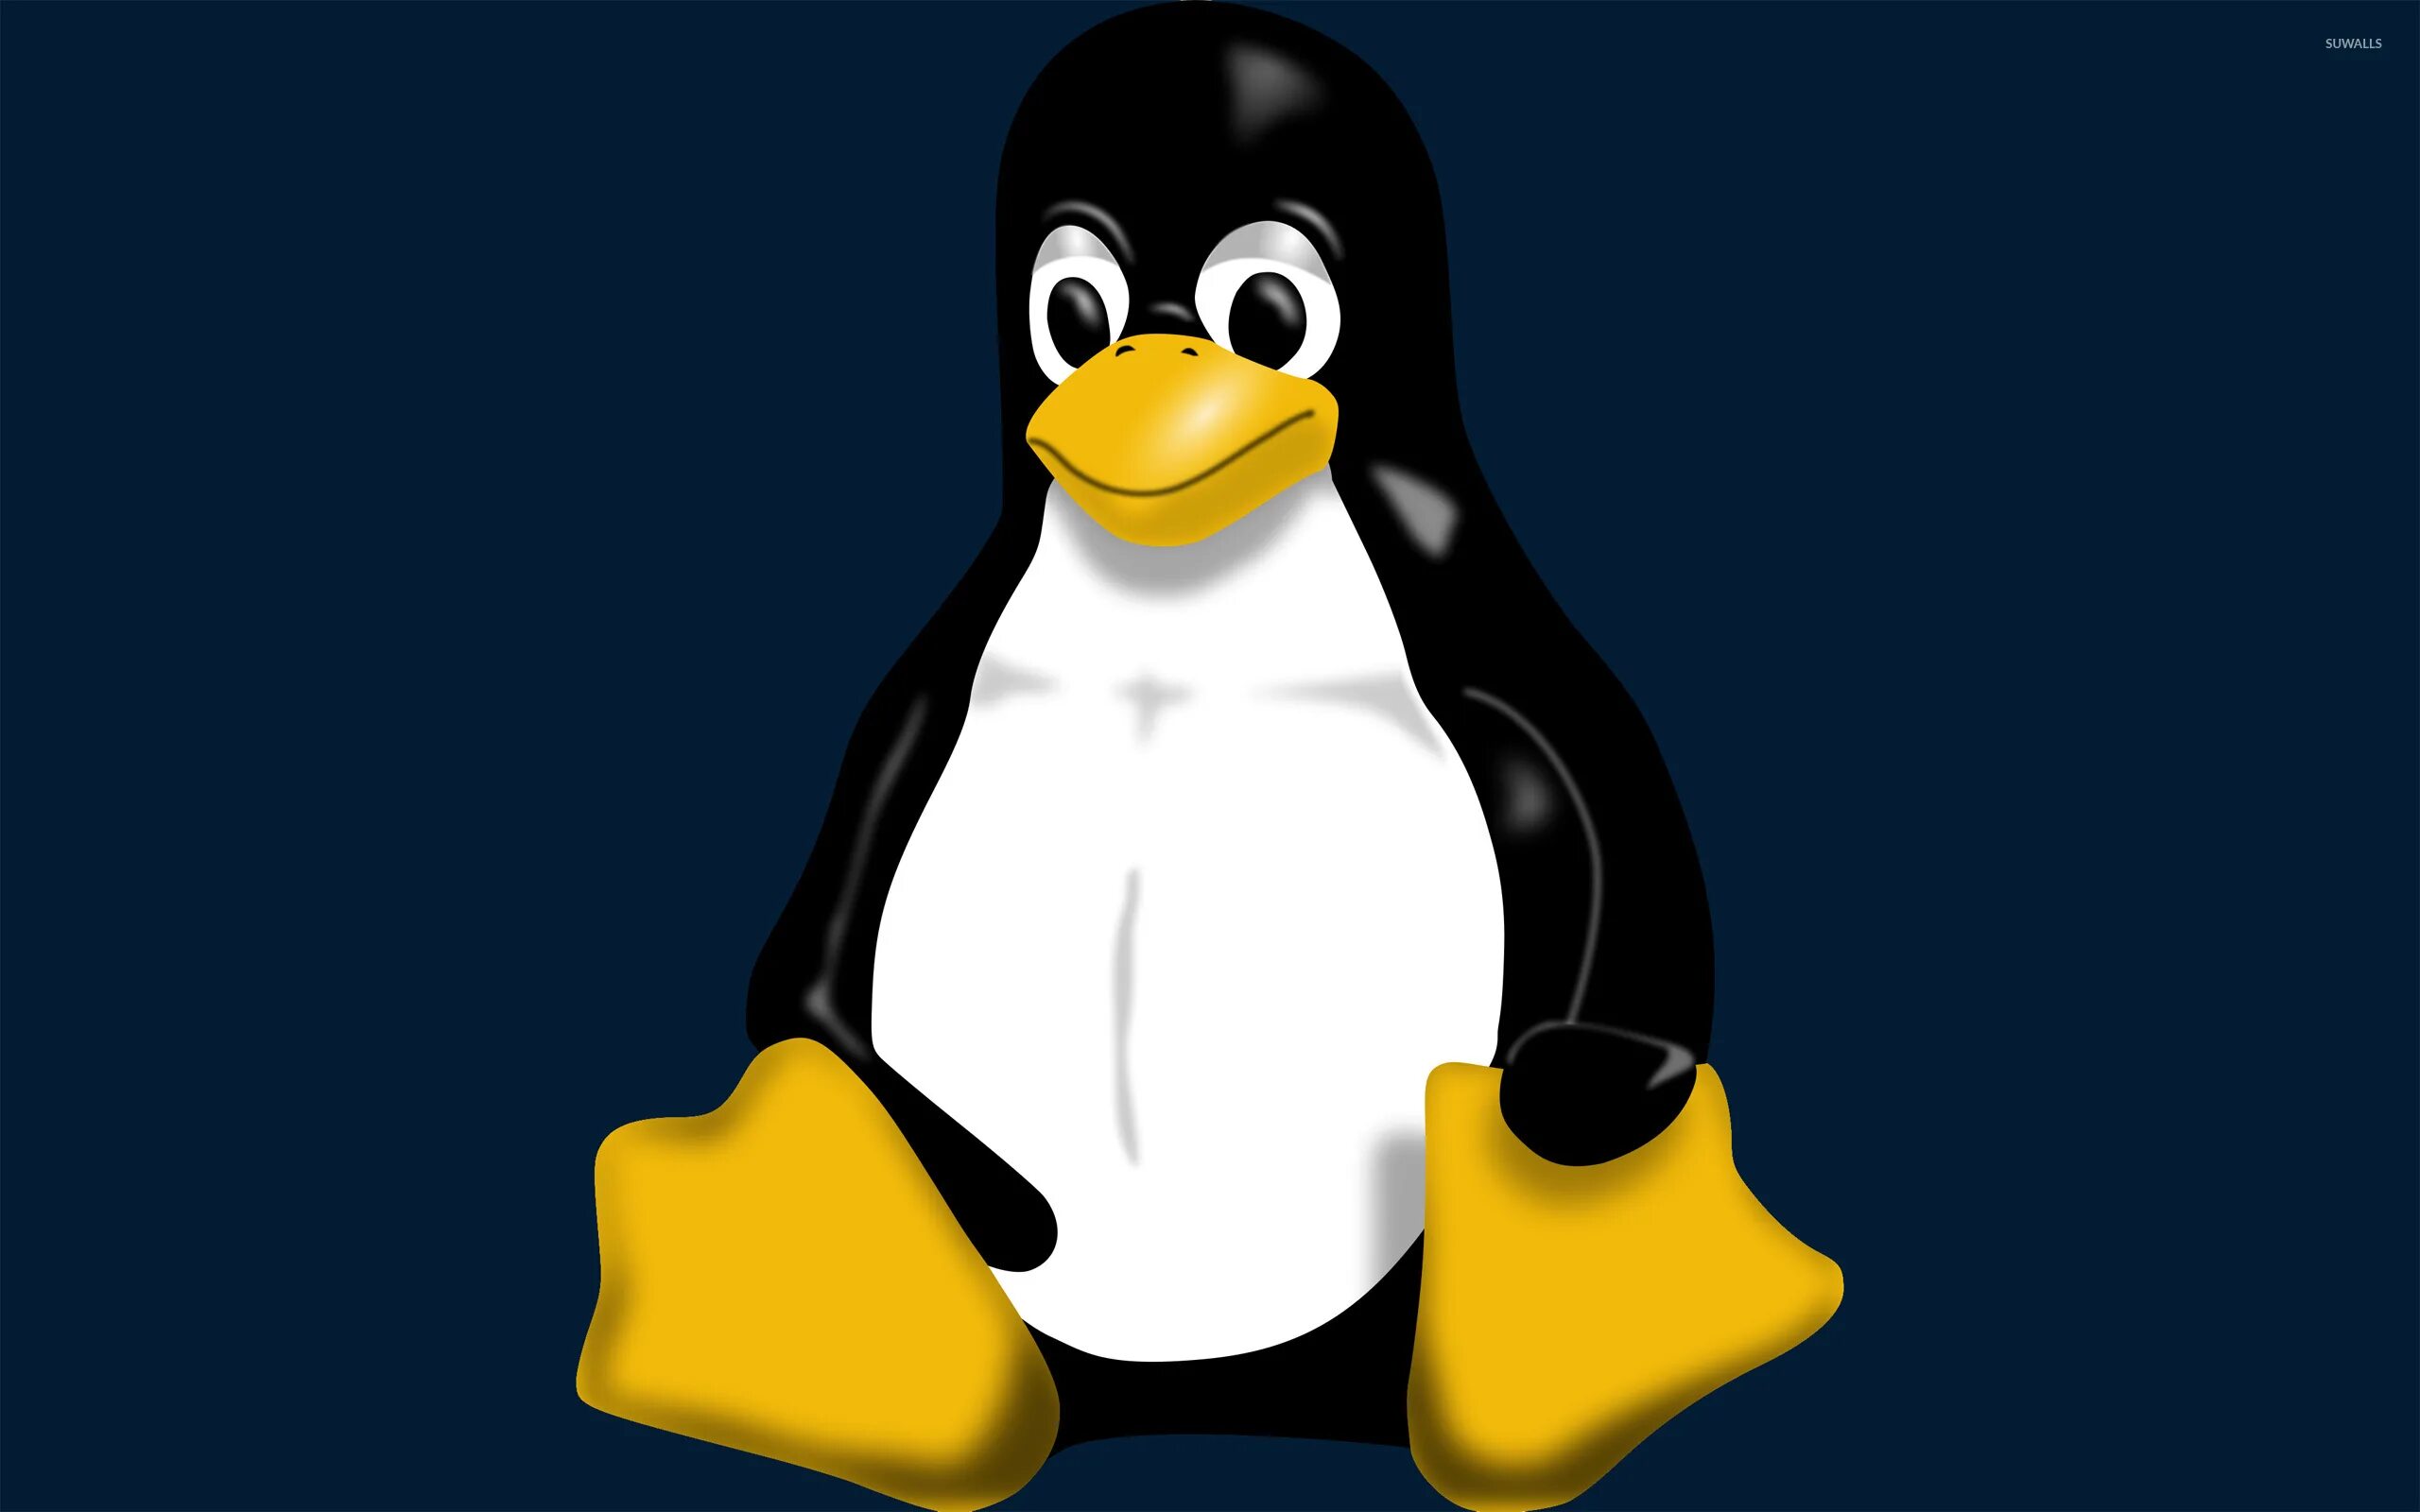 Bmp picture. Изображения с расширением bmp. Рисунки с расширением bmp. Файлы с расширением bmp. Пингвин линукс.